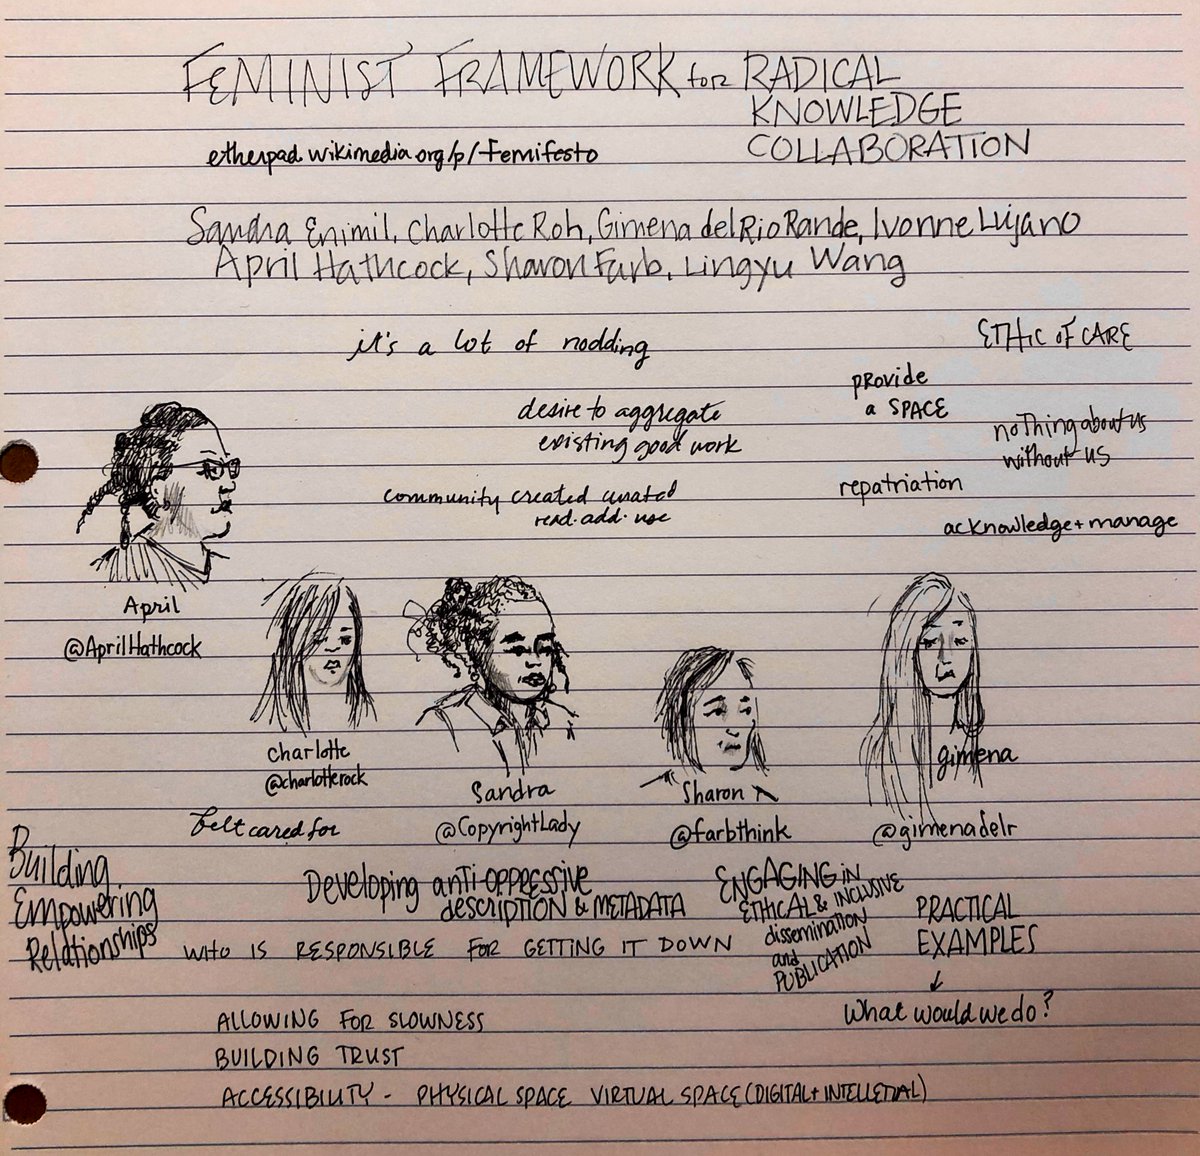 The third plenary today: Feminist Framework for Radical Knowledge Collaboration. @AprilHathcock @CharlotteRock @CopyrightLady @FarbThink @gimenadelr #TriangleSCI #jojodoodles